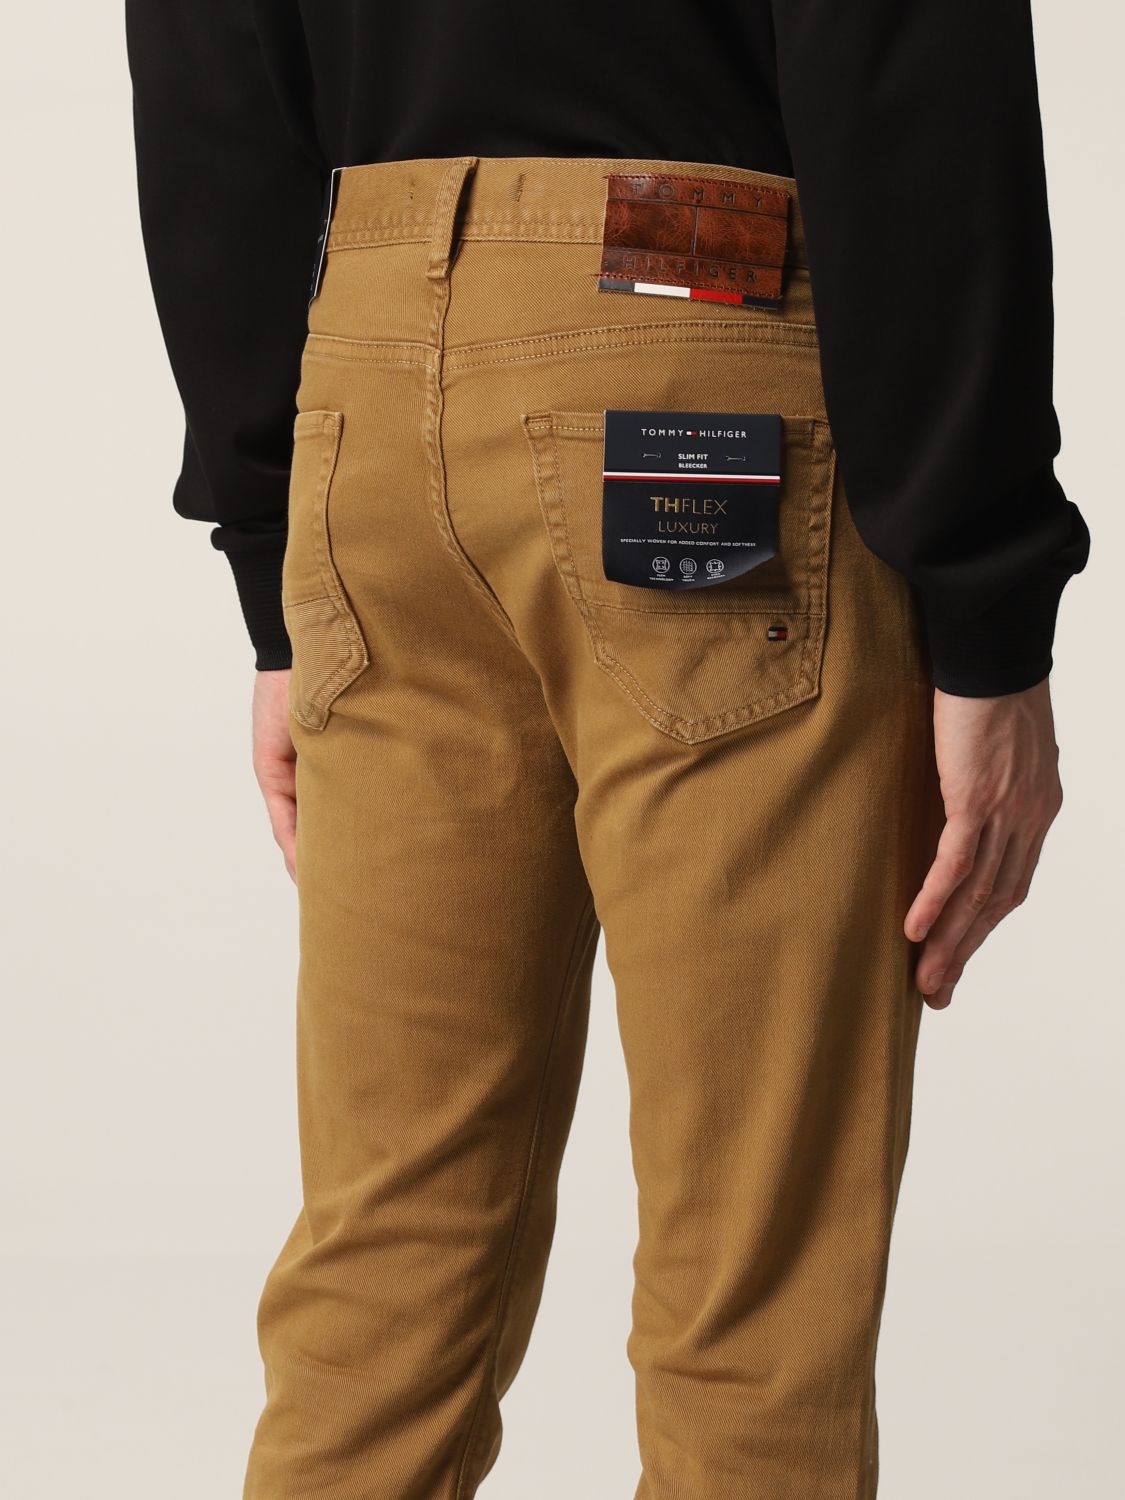 Tommy Hilfiger slacks discount 97% MEN FASHION Trousers Corduroy Brown 